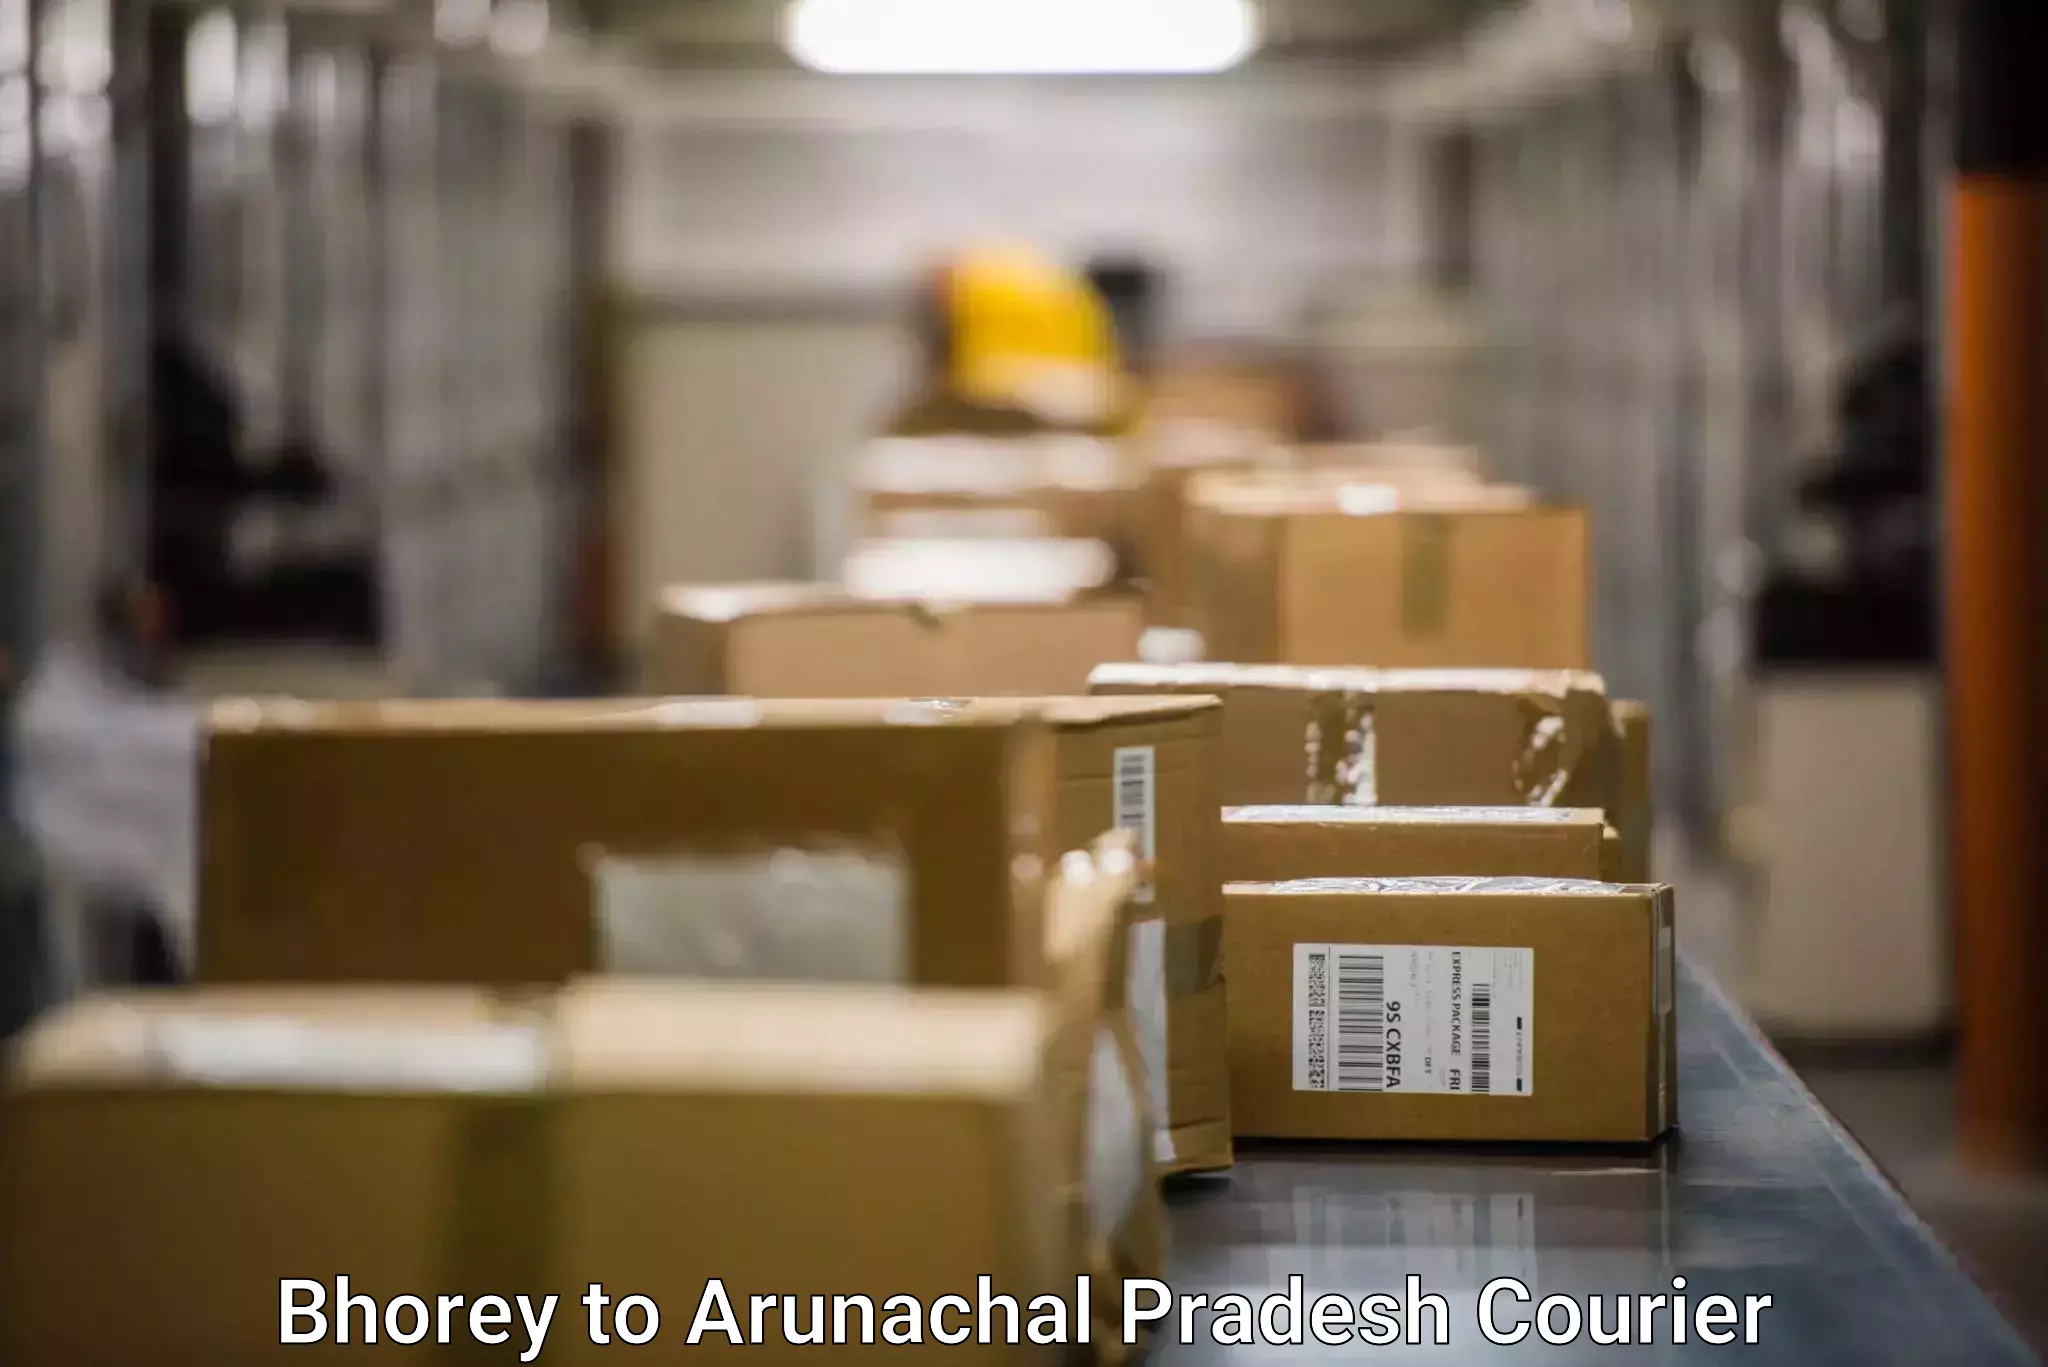 Courier membership in Bhorey to Arunachal Pradesh